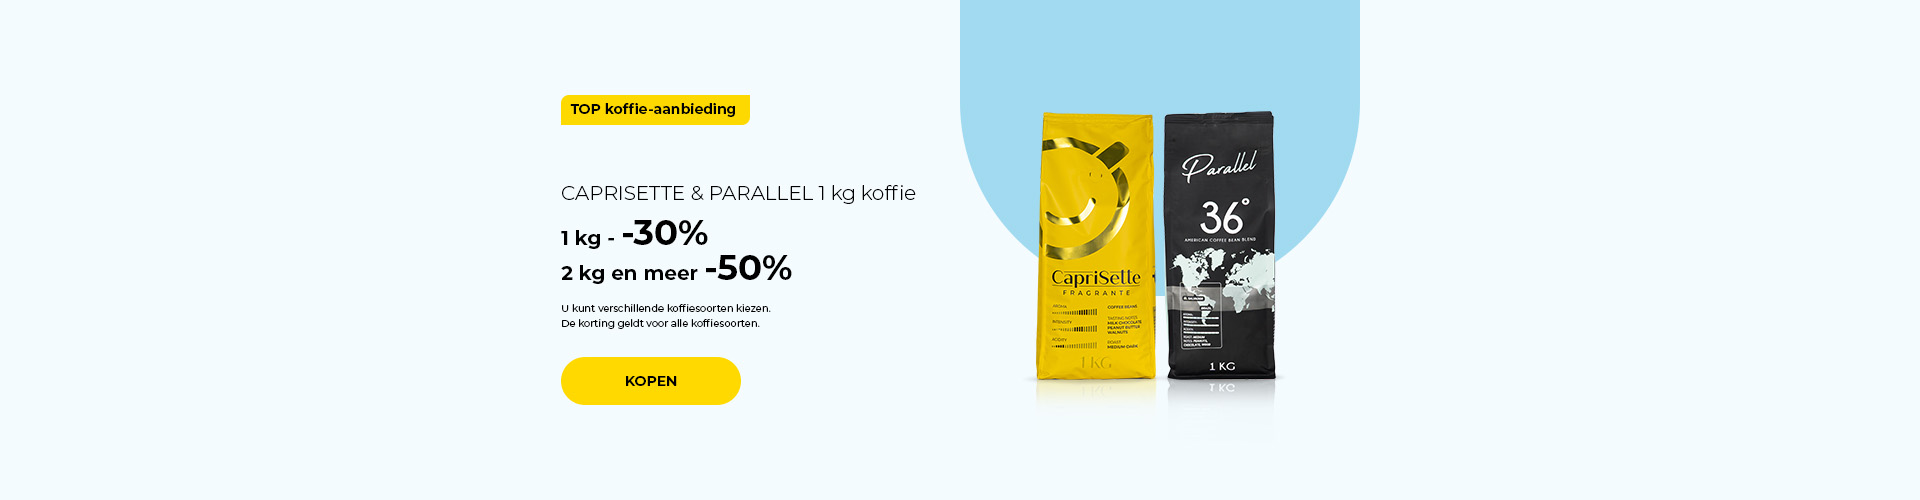 CAPRISETTE & PARALLEL 1 kg koffie 1 kg -30% 2 kg en meer -50%